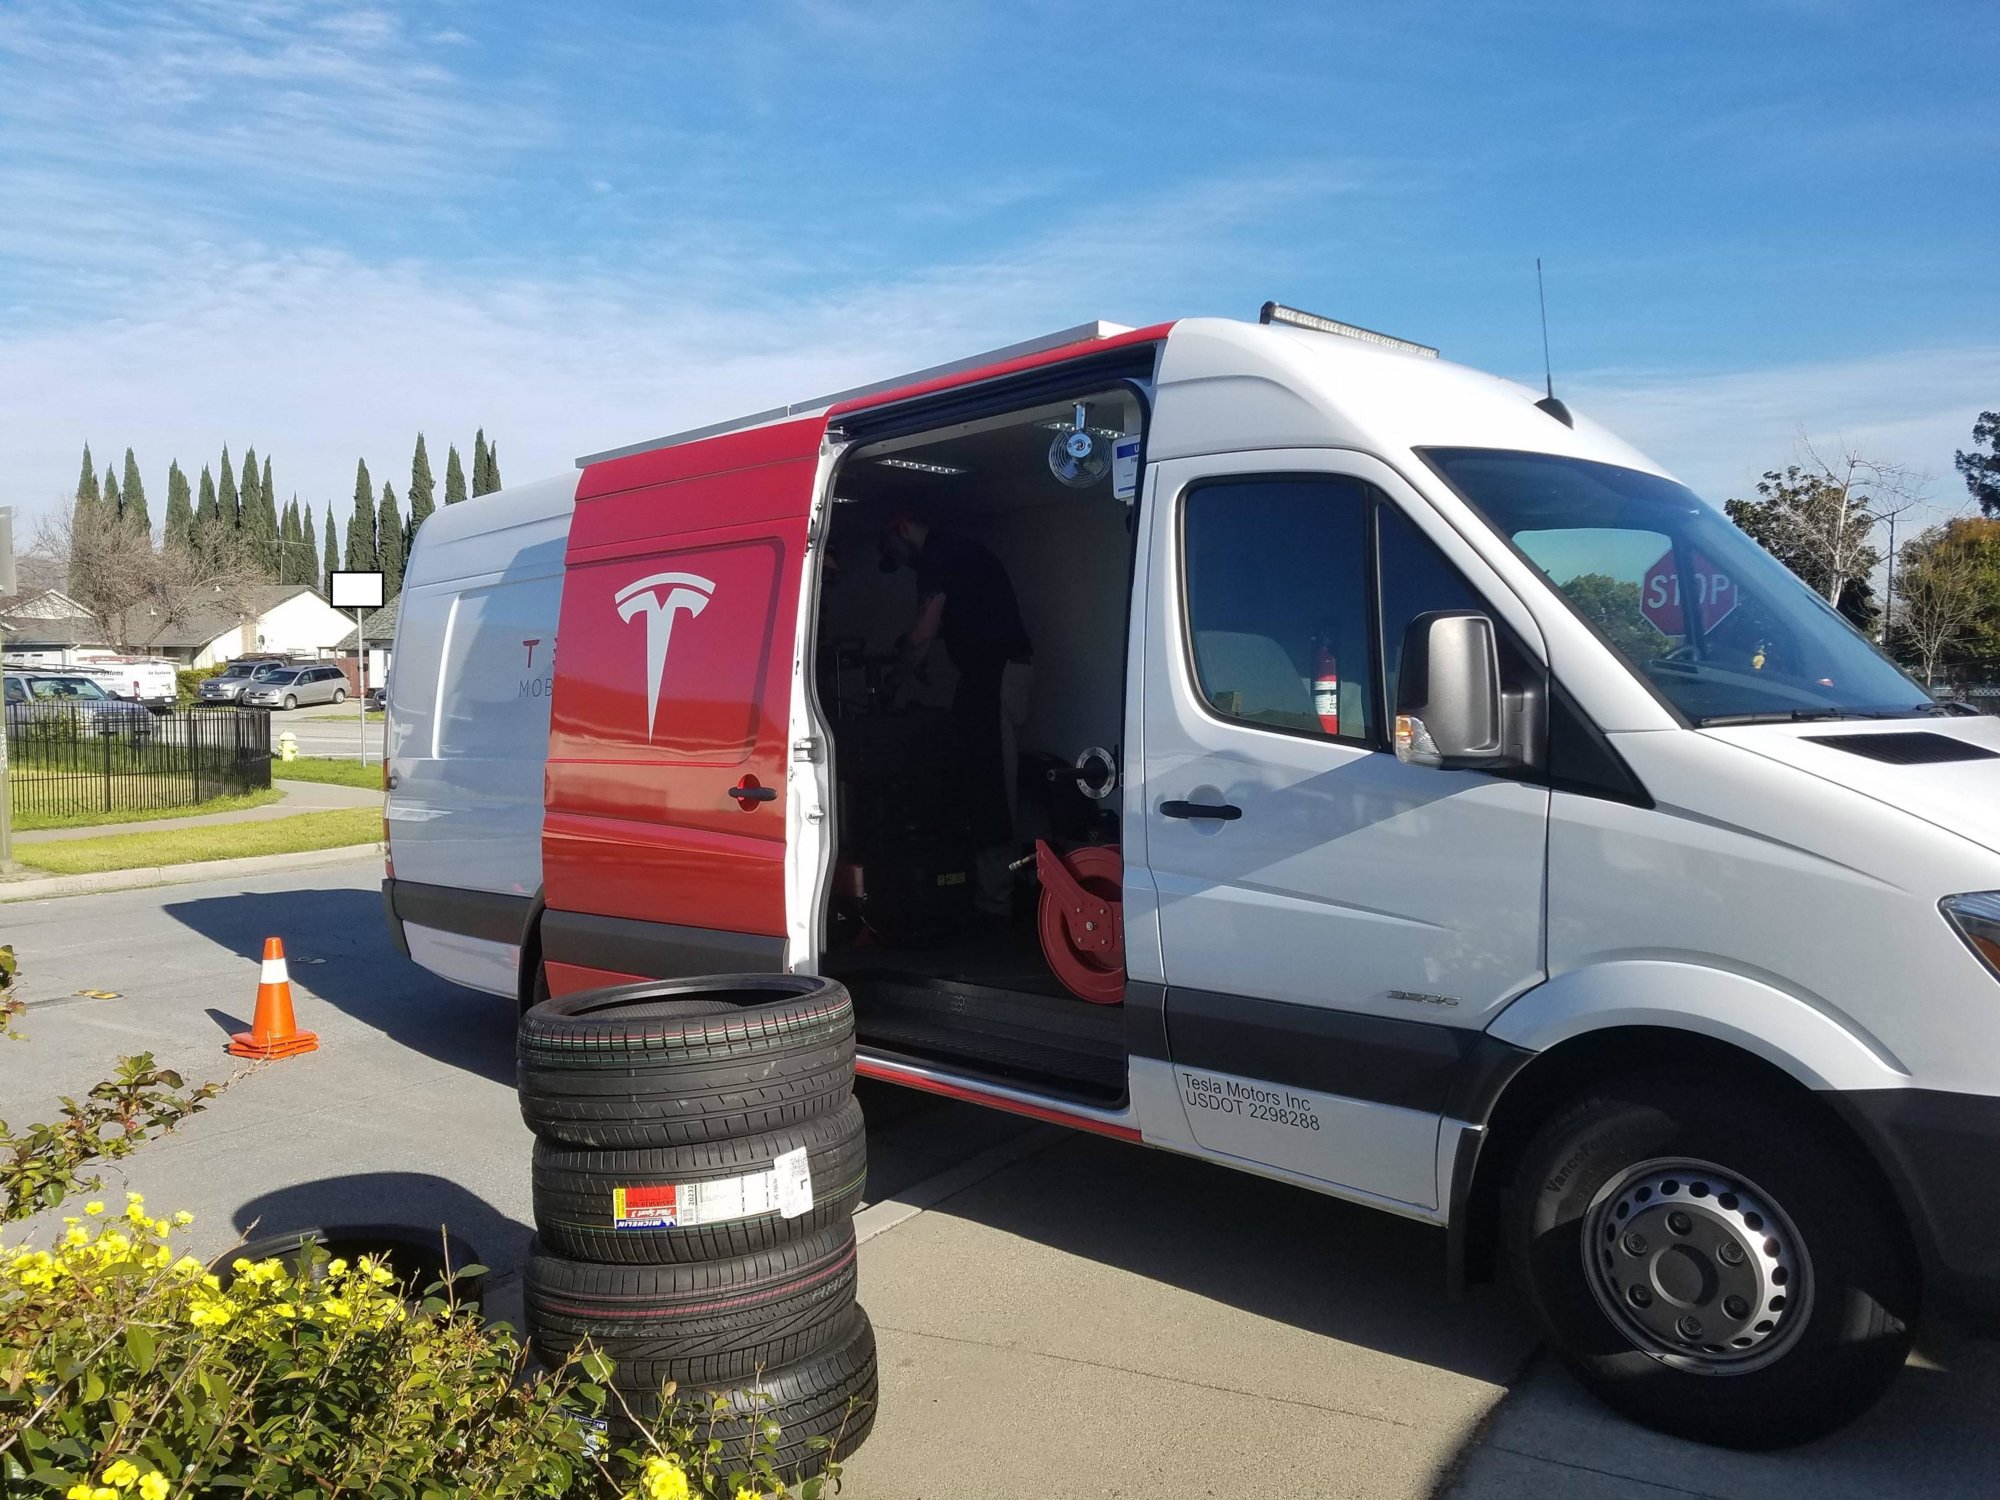 Tesla-mobile-service-van-tire-repair-3.jpg